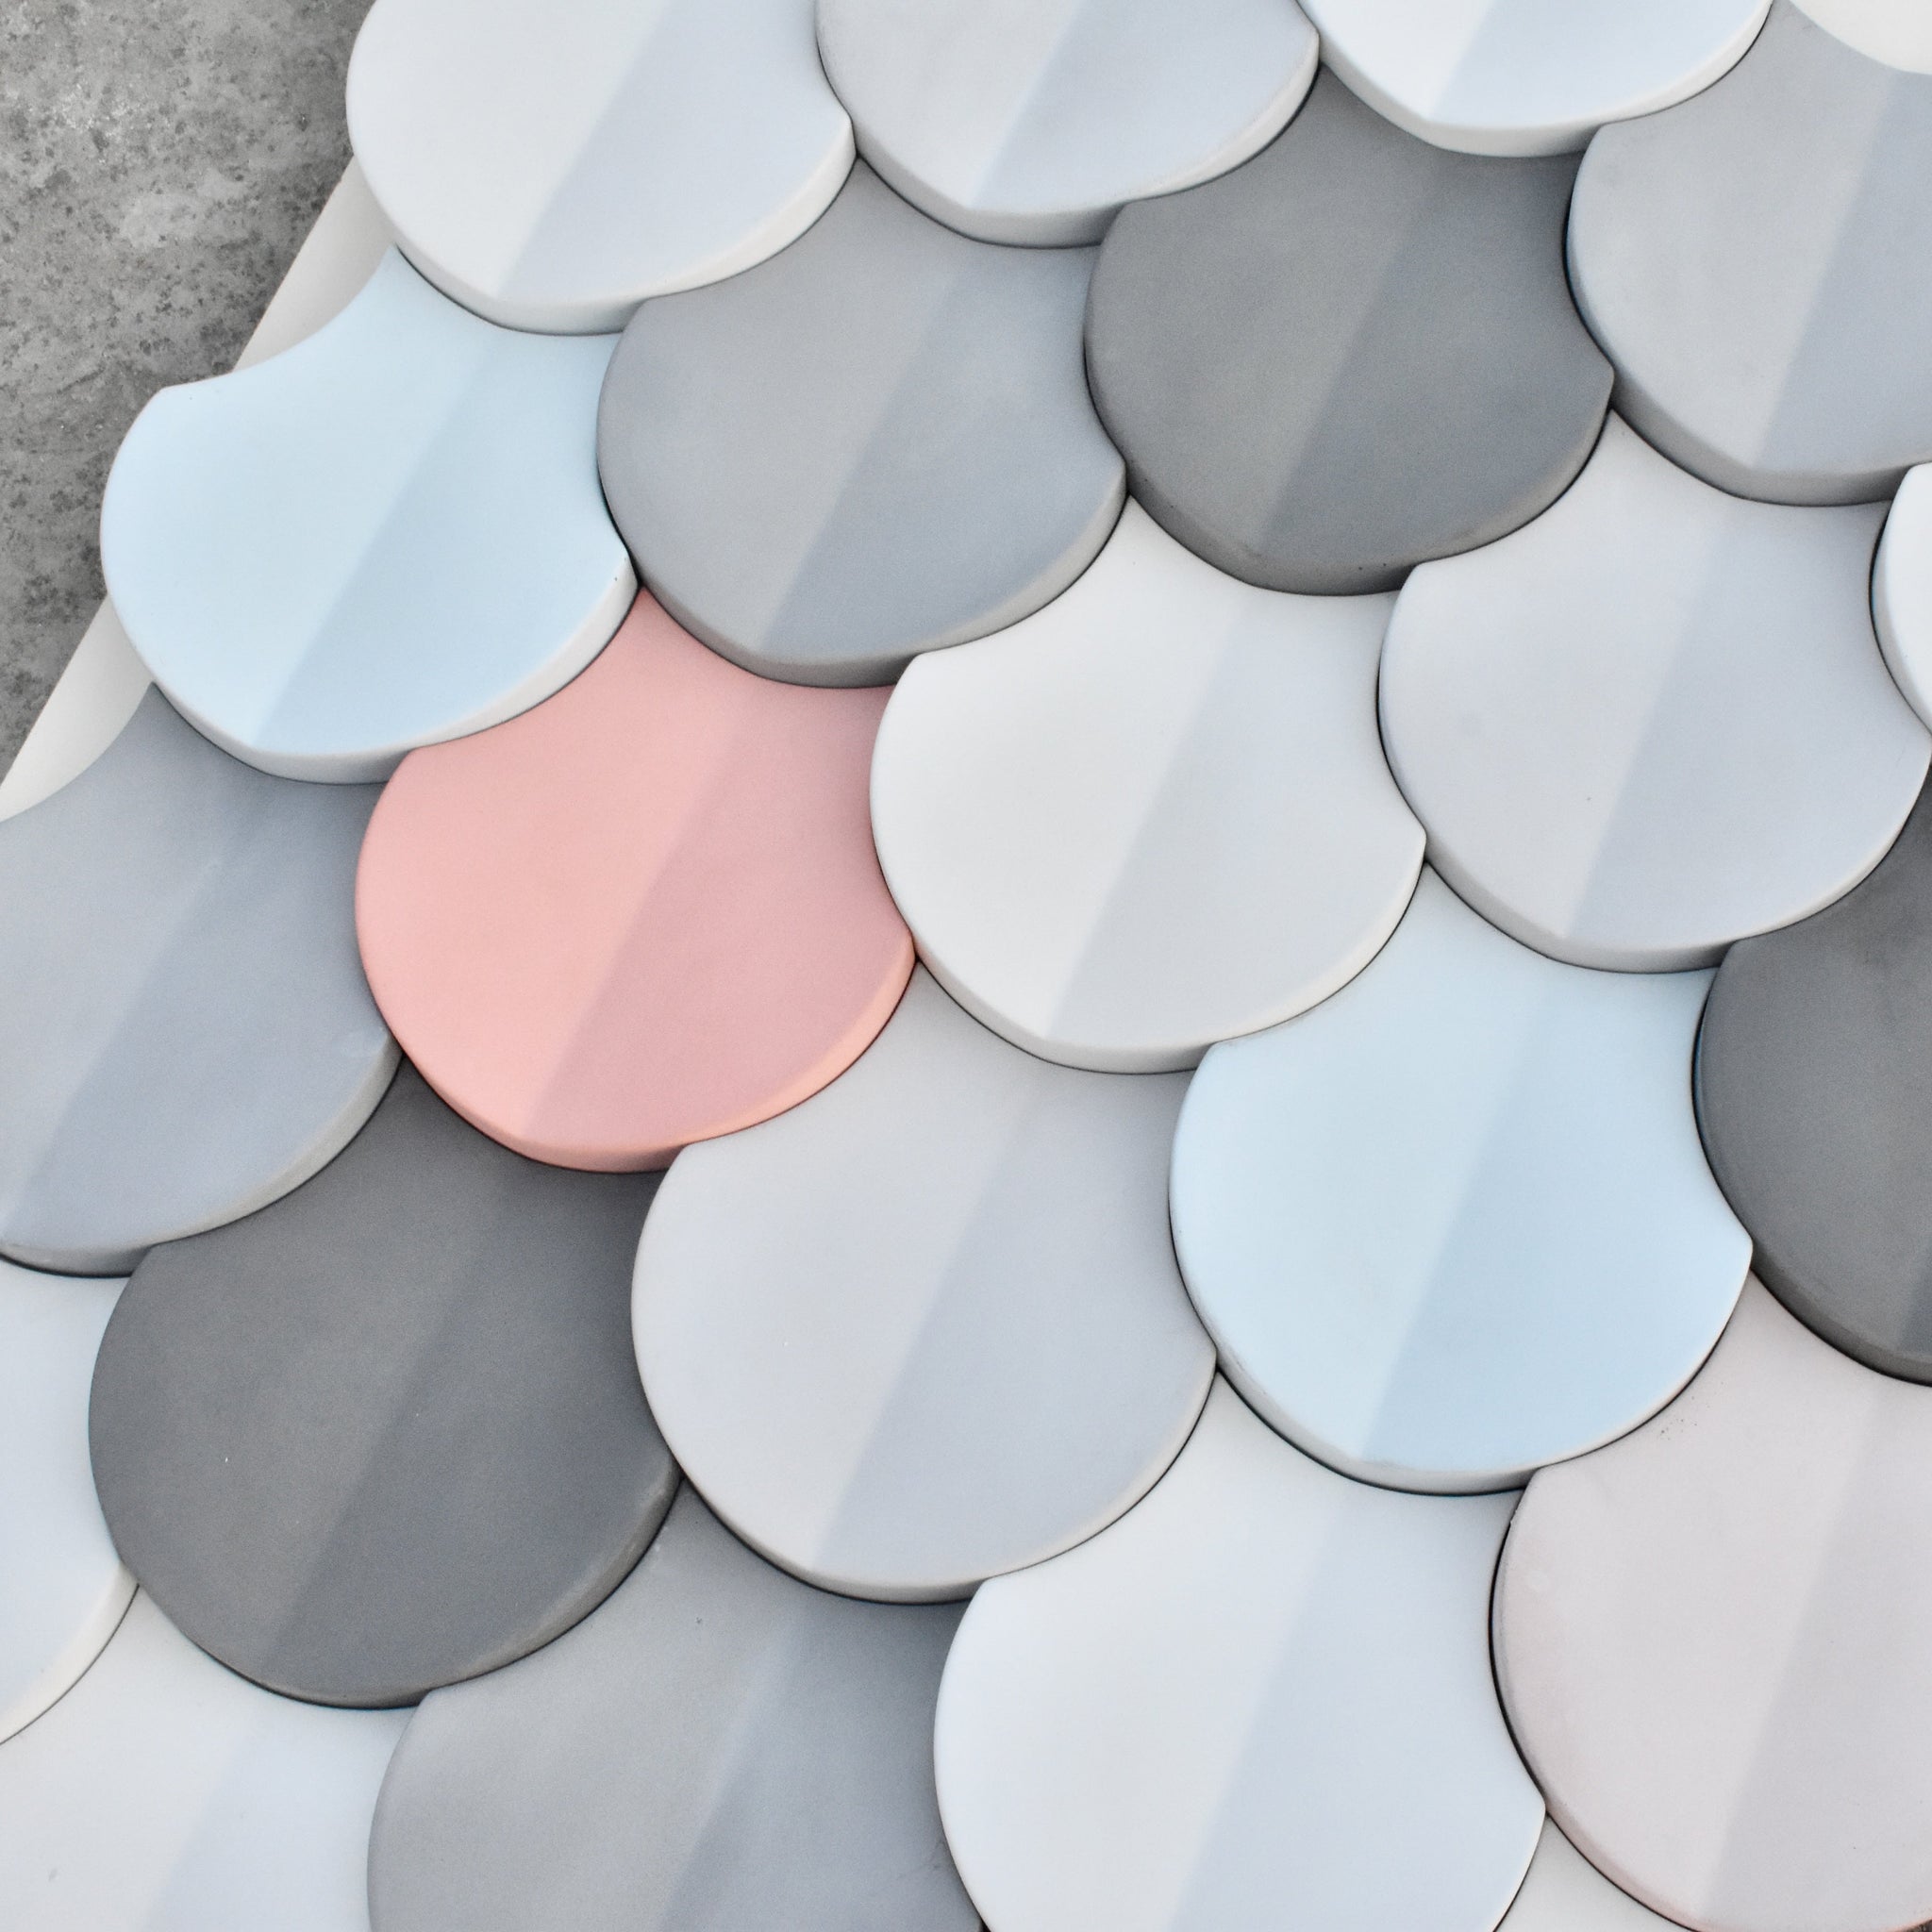 Blaze - Concrete 3D wall tiles | UHPC Tiles | Interior & Exterior Wall Tiles | Set of 10pcs